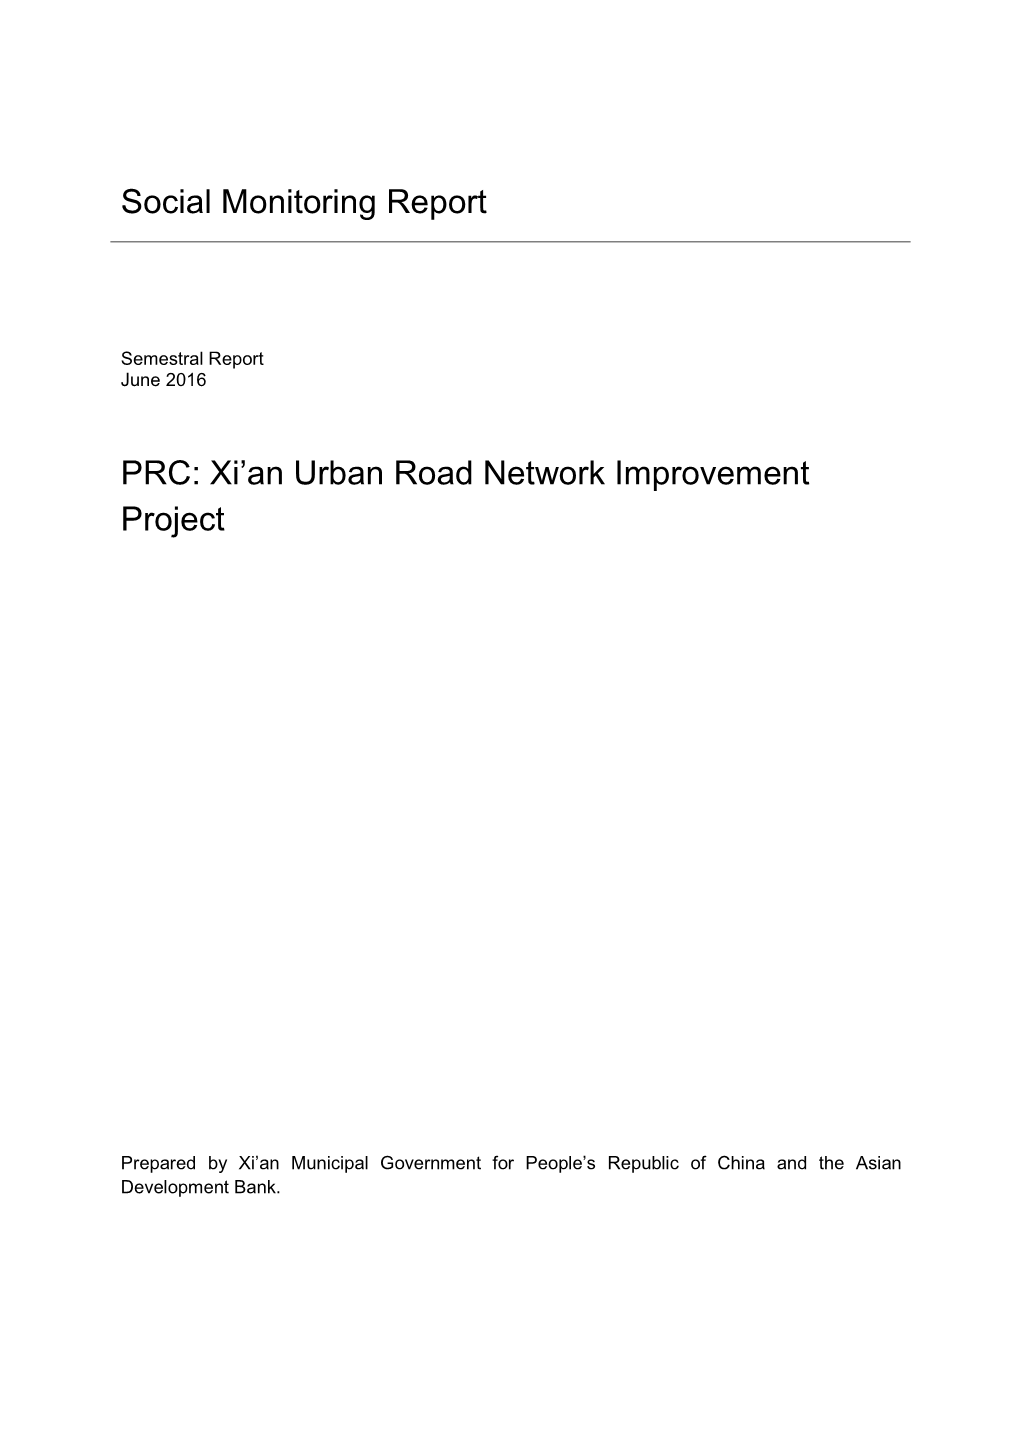 Xi'an Urban Road Network Improvement Project